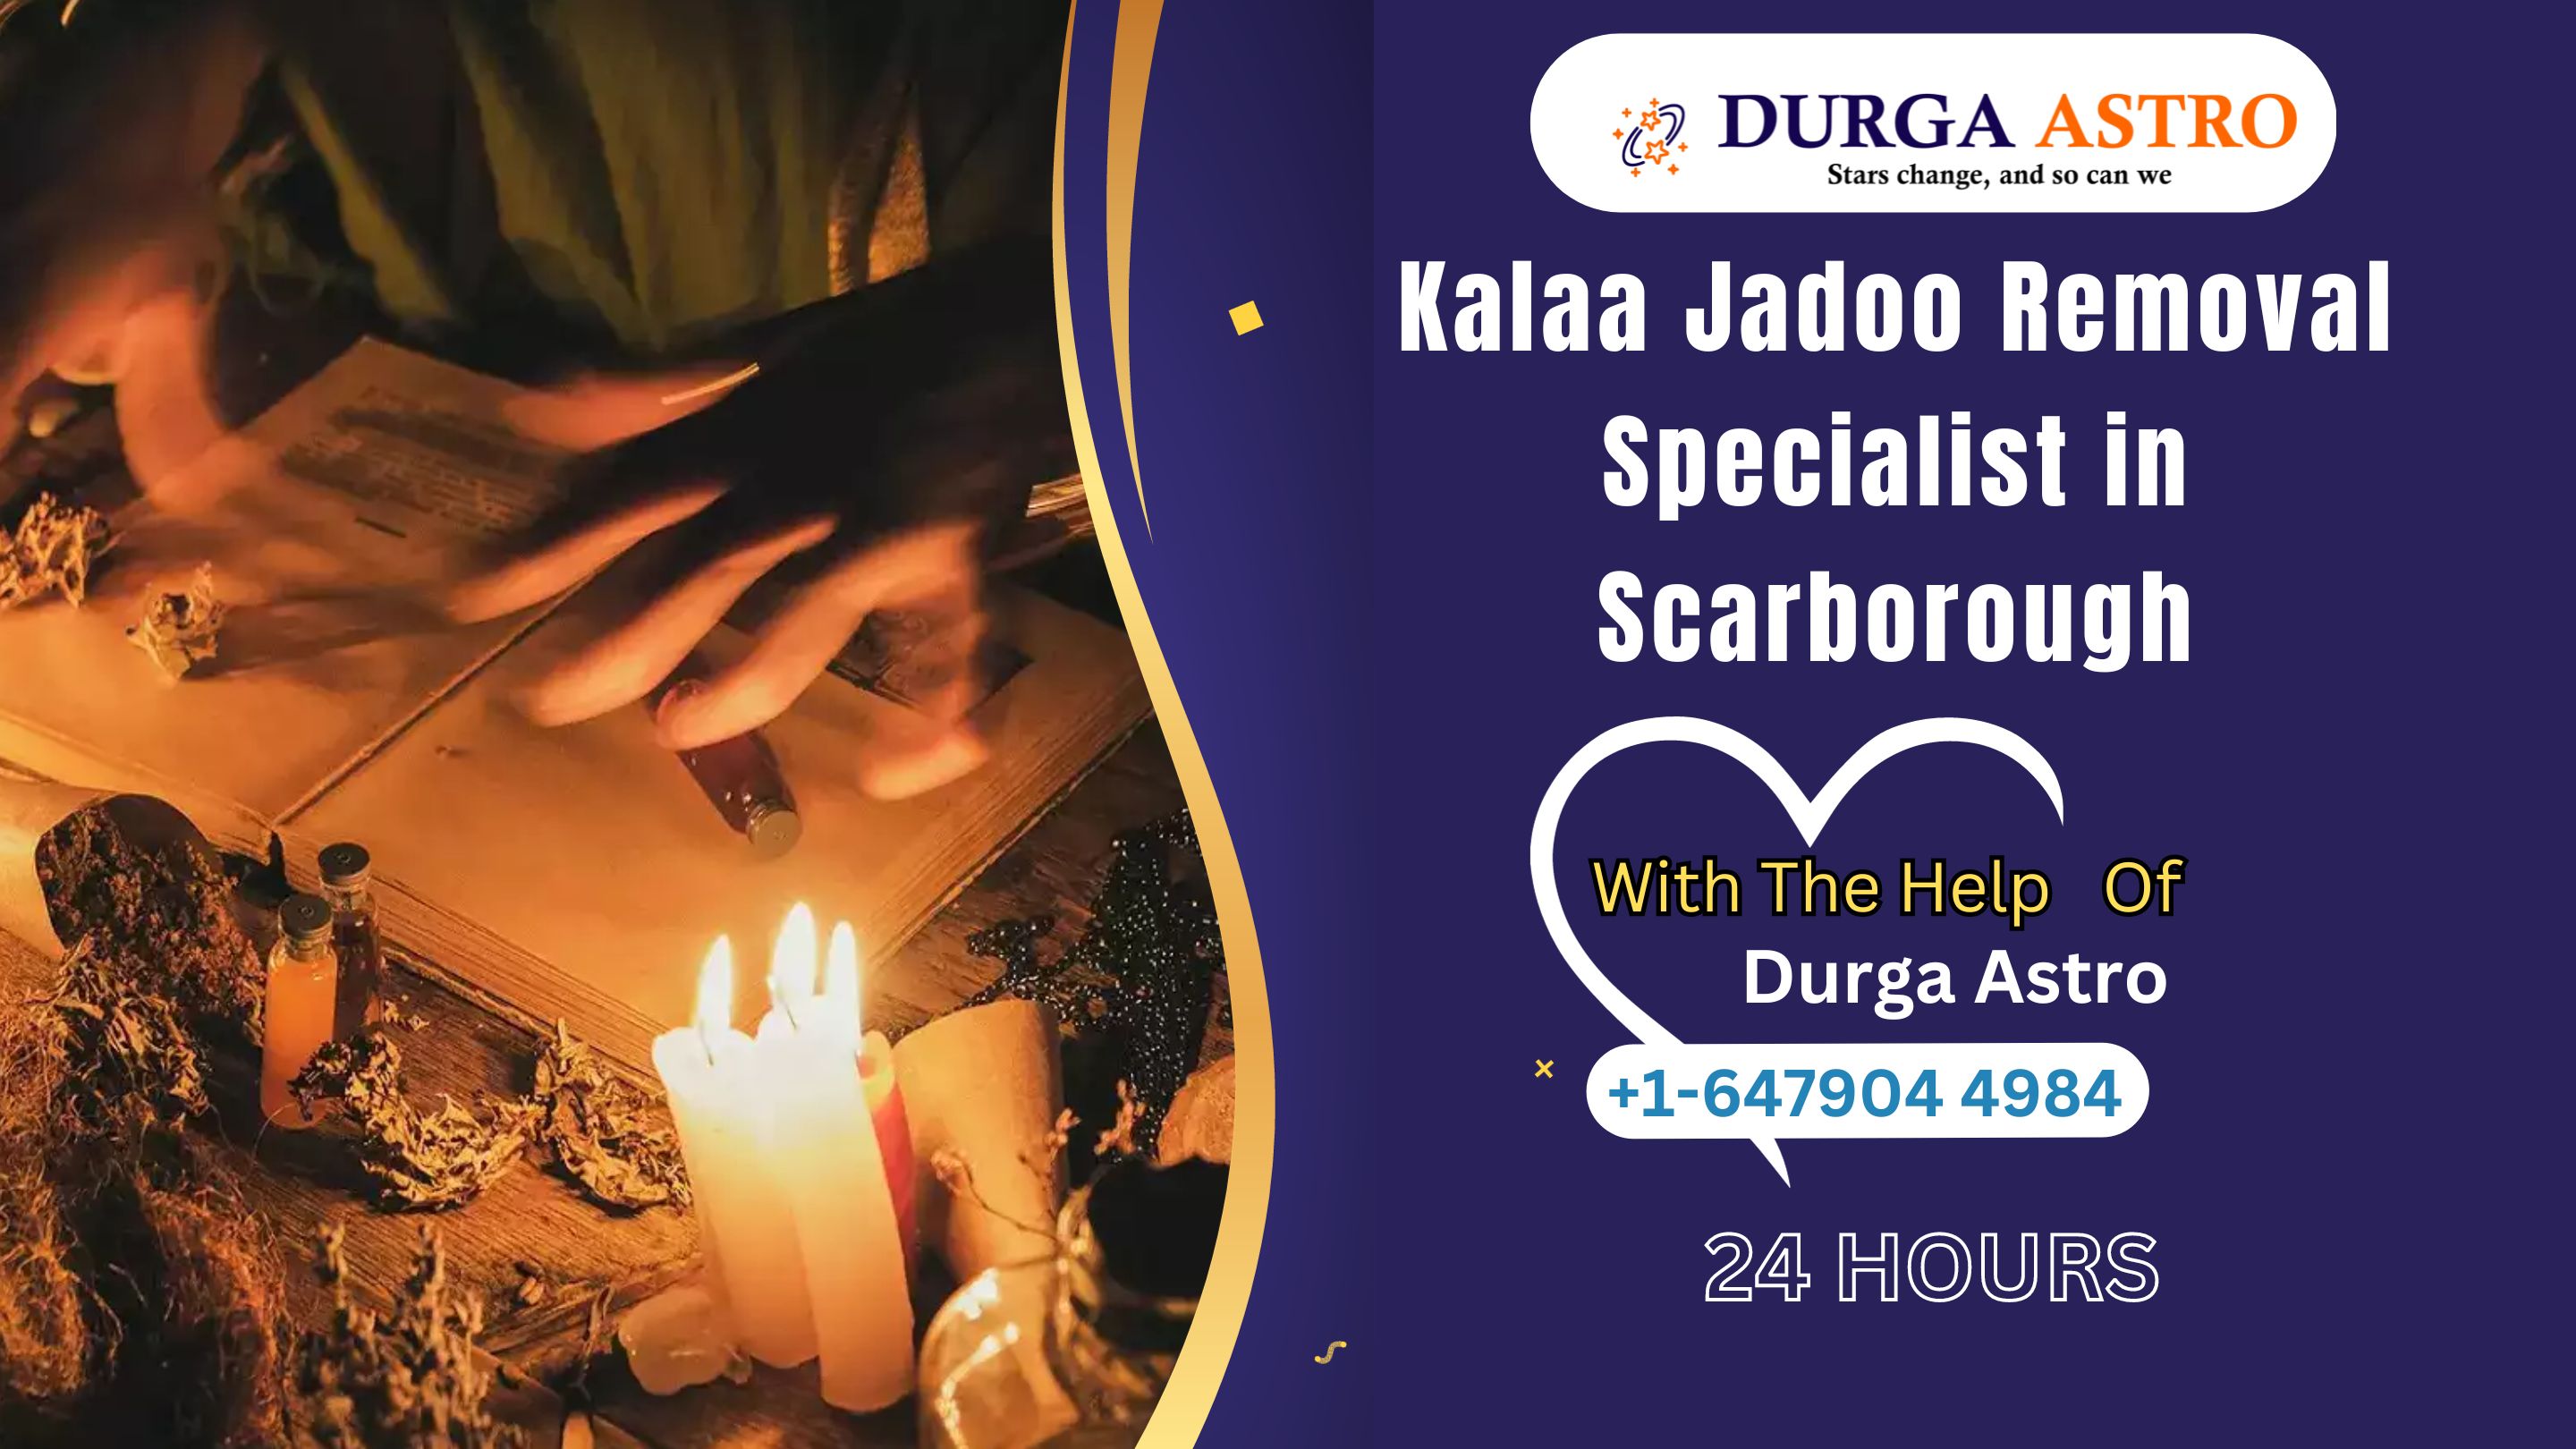 Kalaa Jadoo Removal Specialist in Scarborough